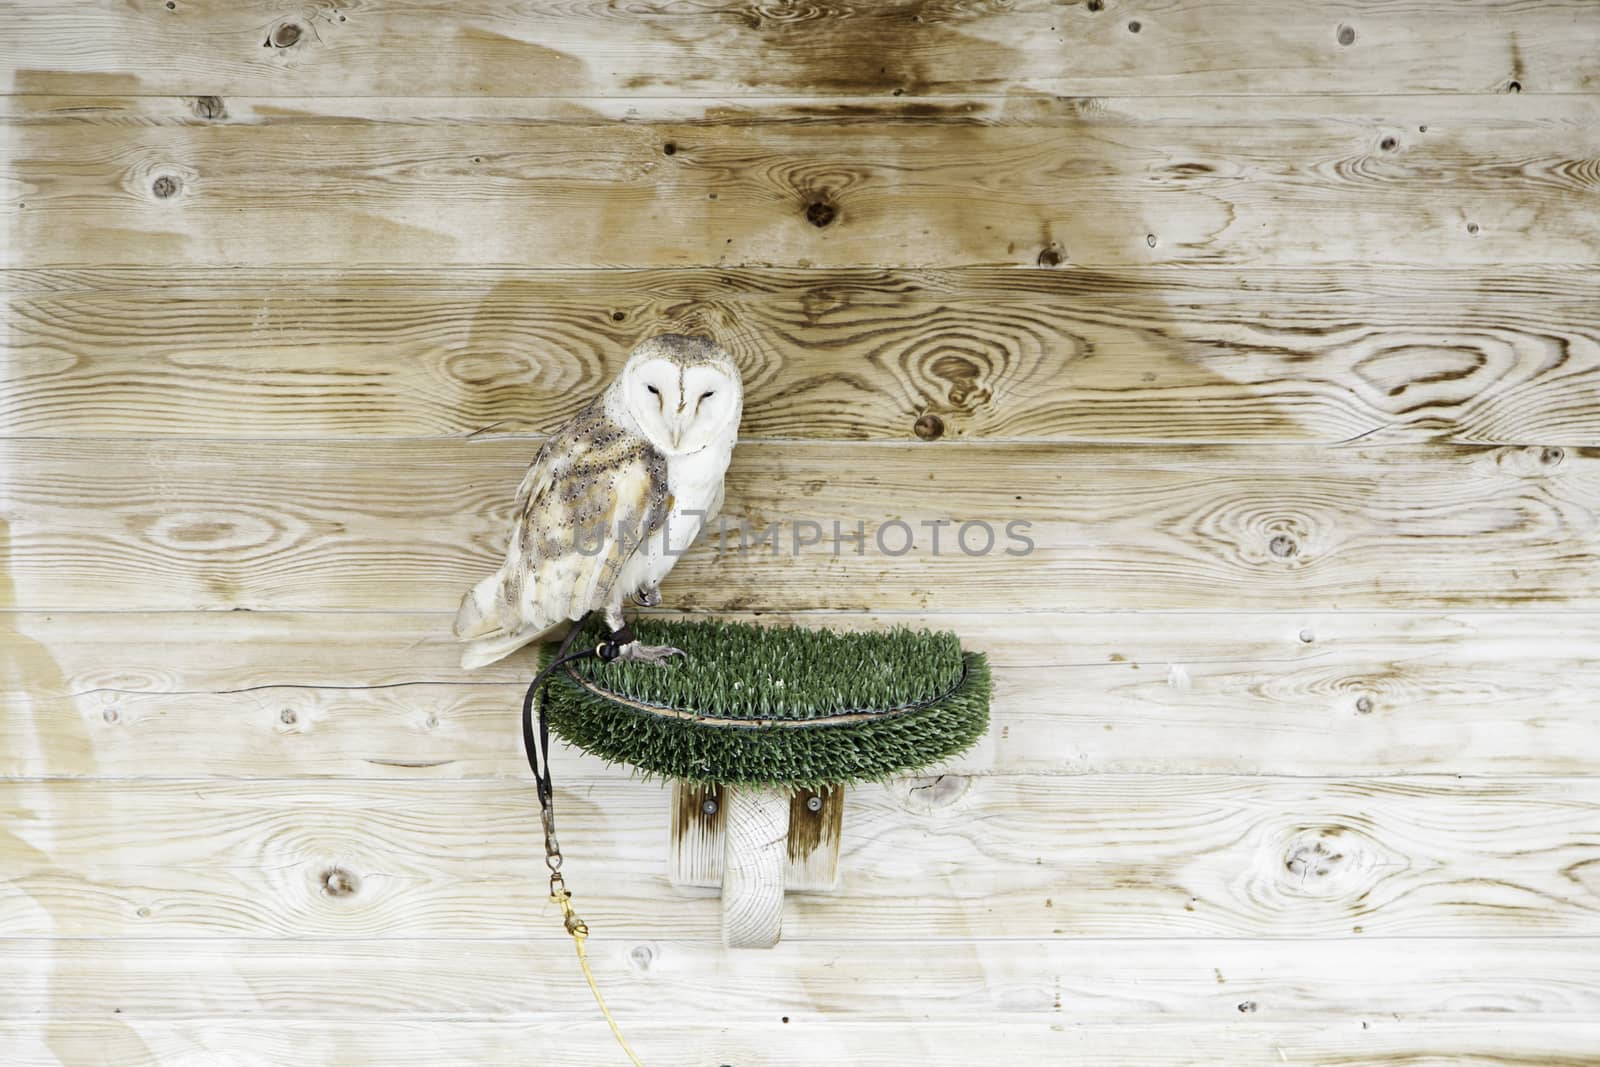 Wild owl in captivity by esebene